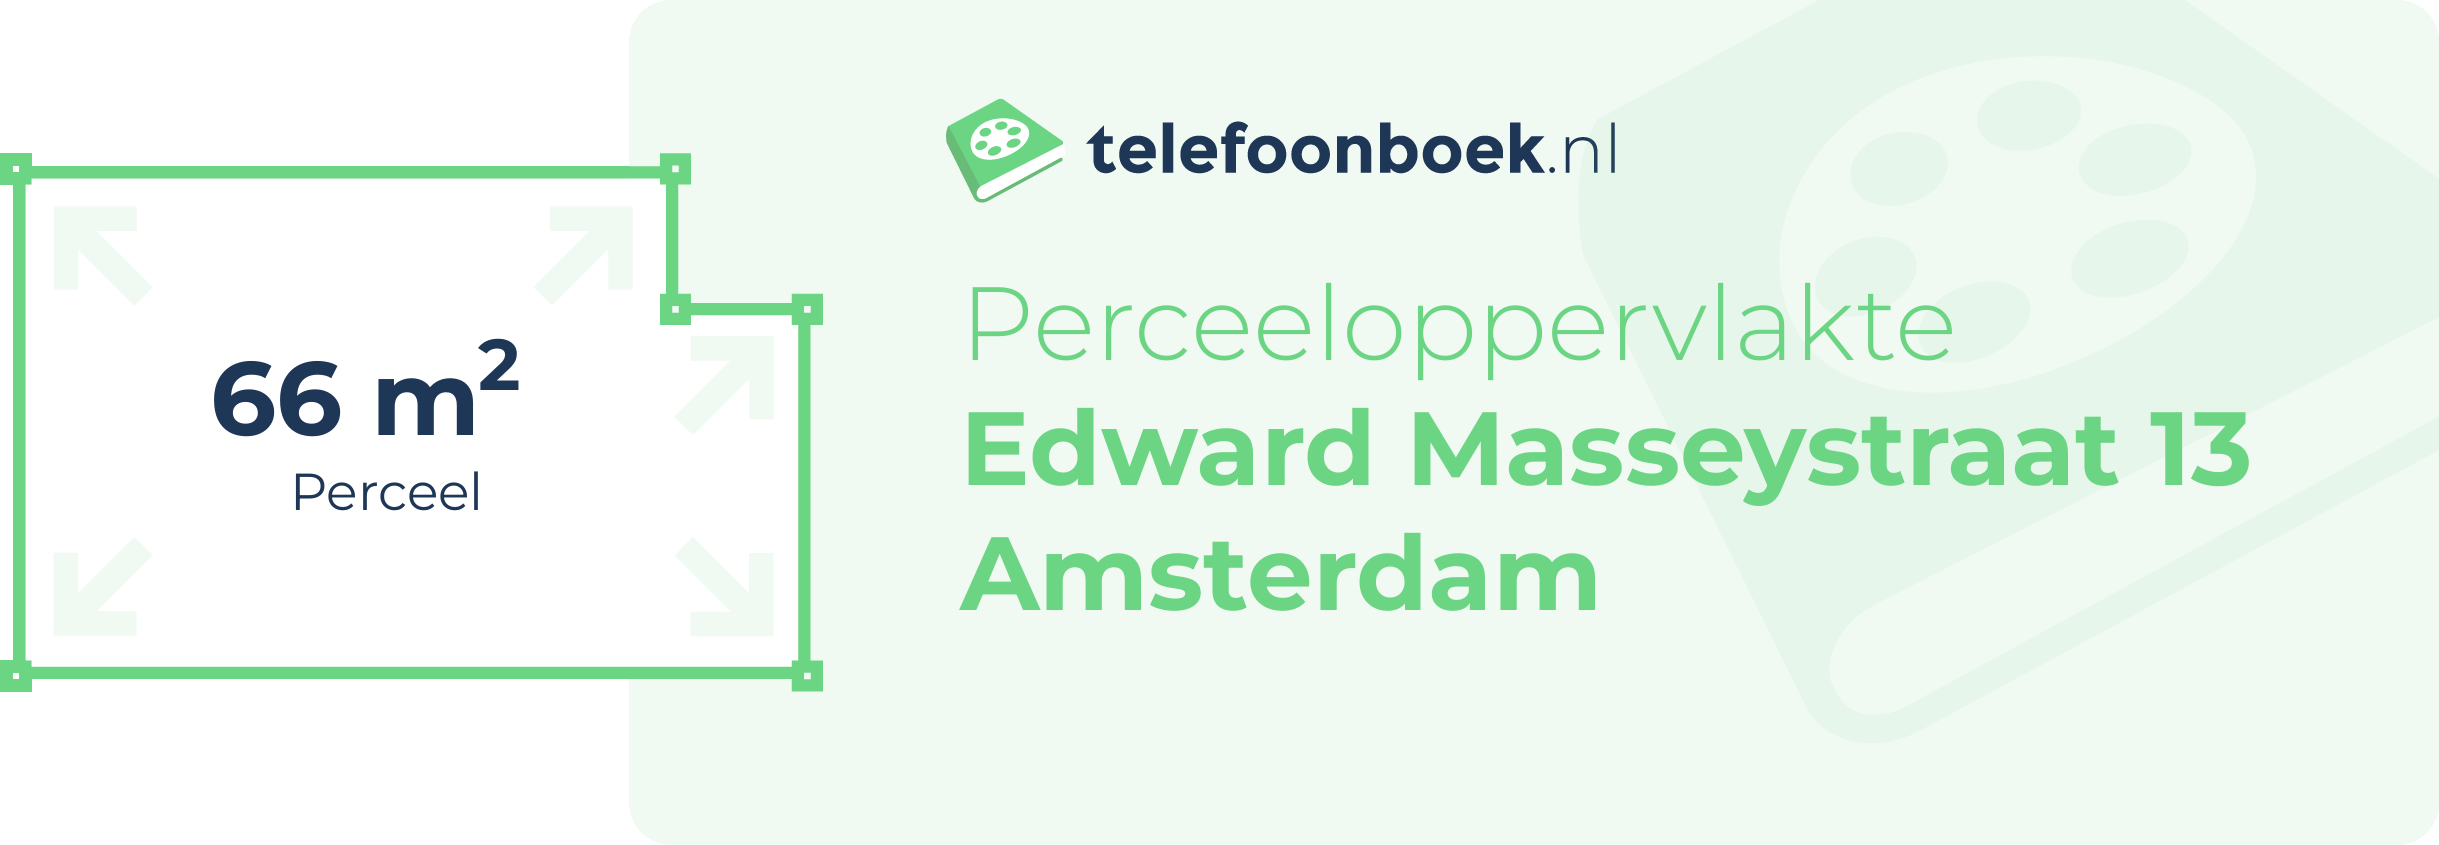 Perceeloppervlakte Edward Masseystraat 13 Amsterdam